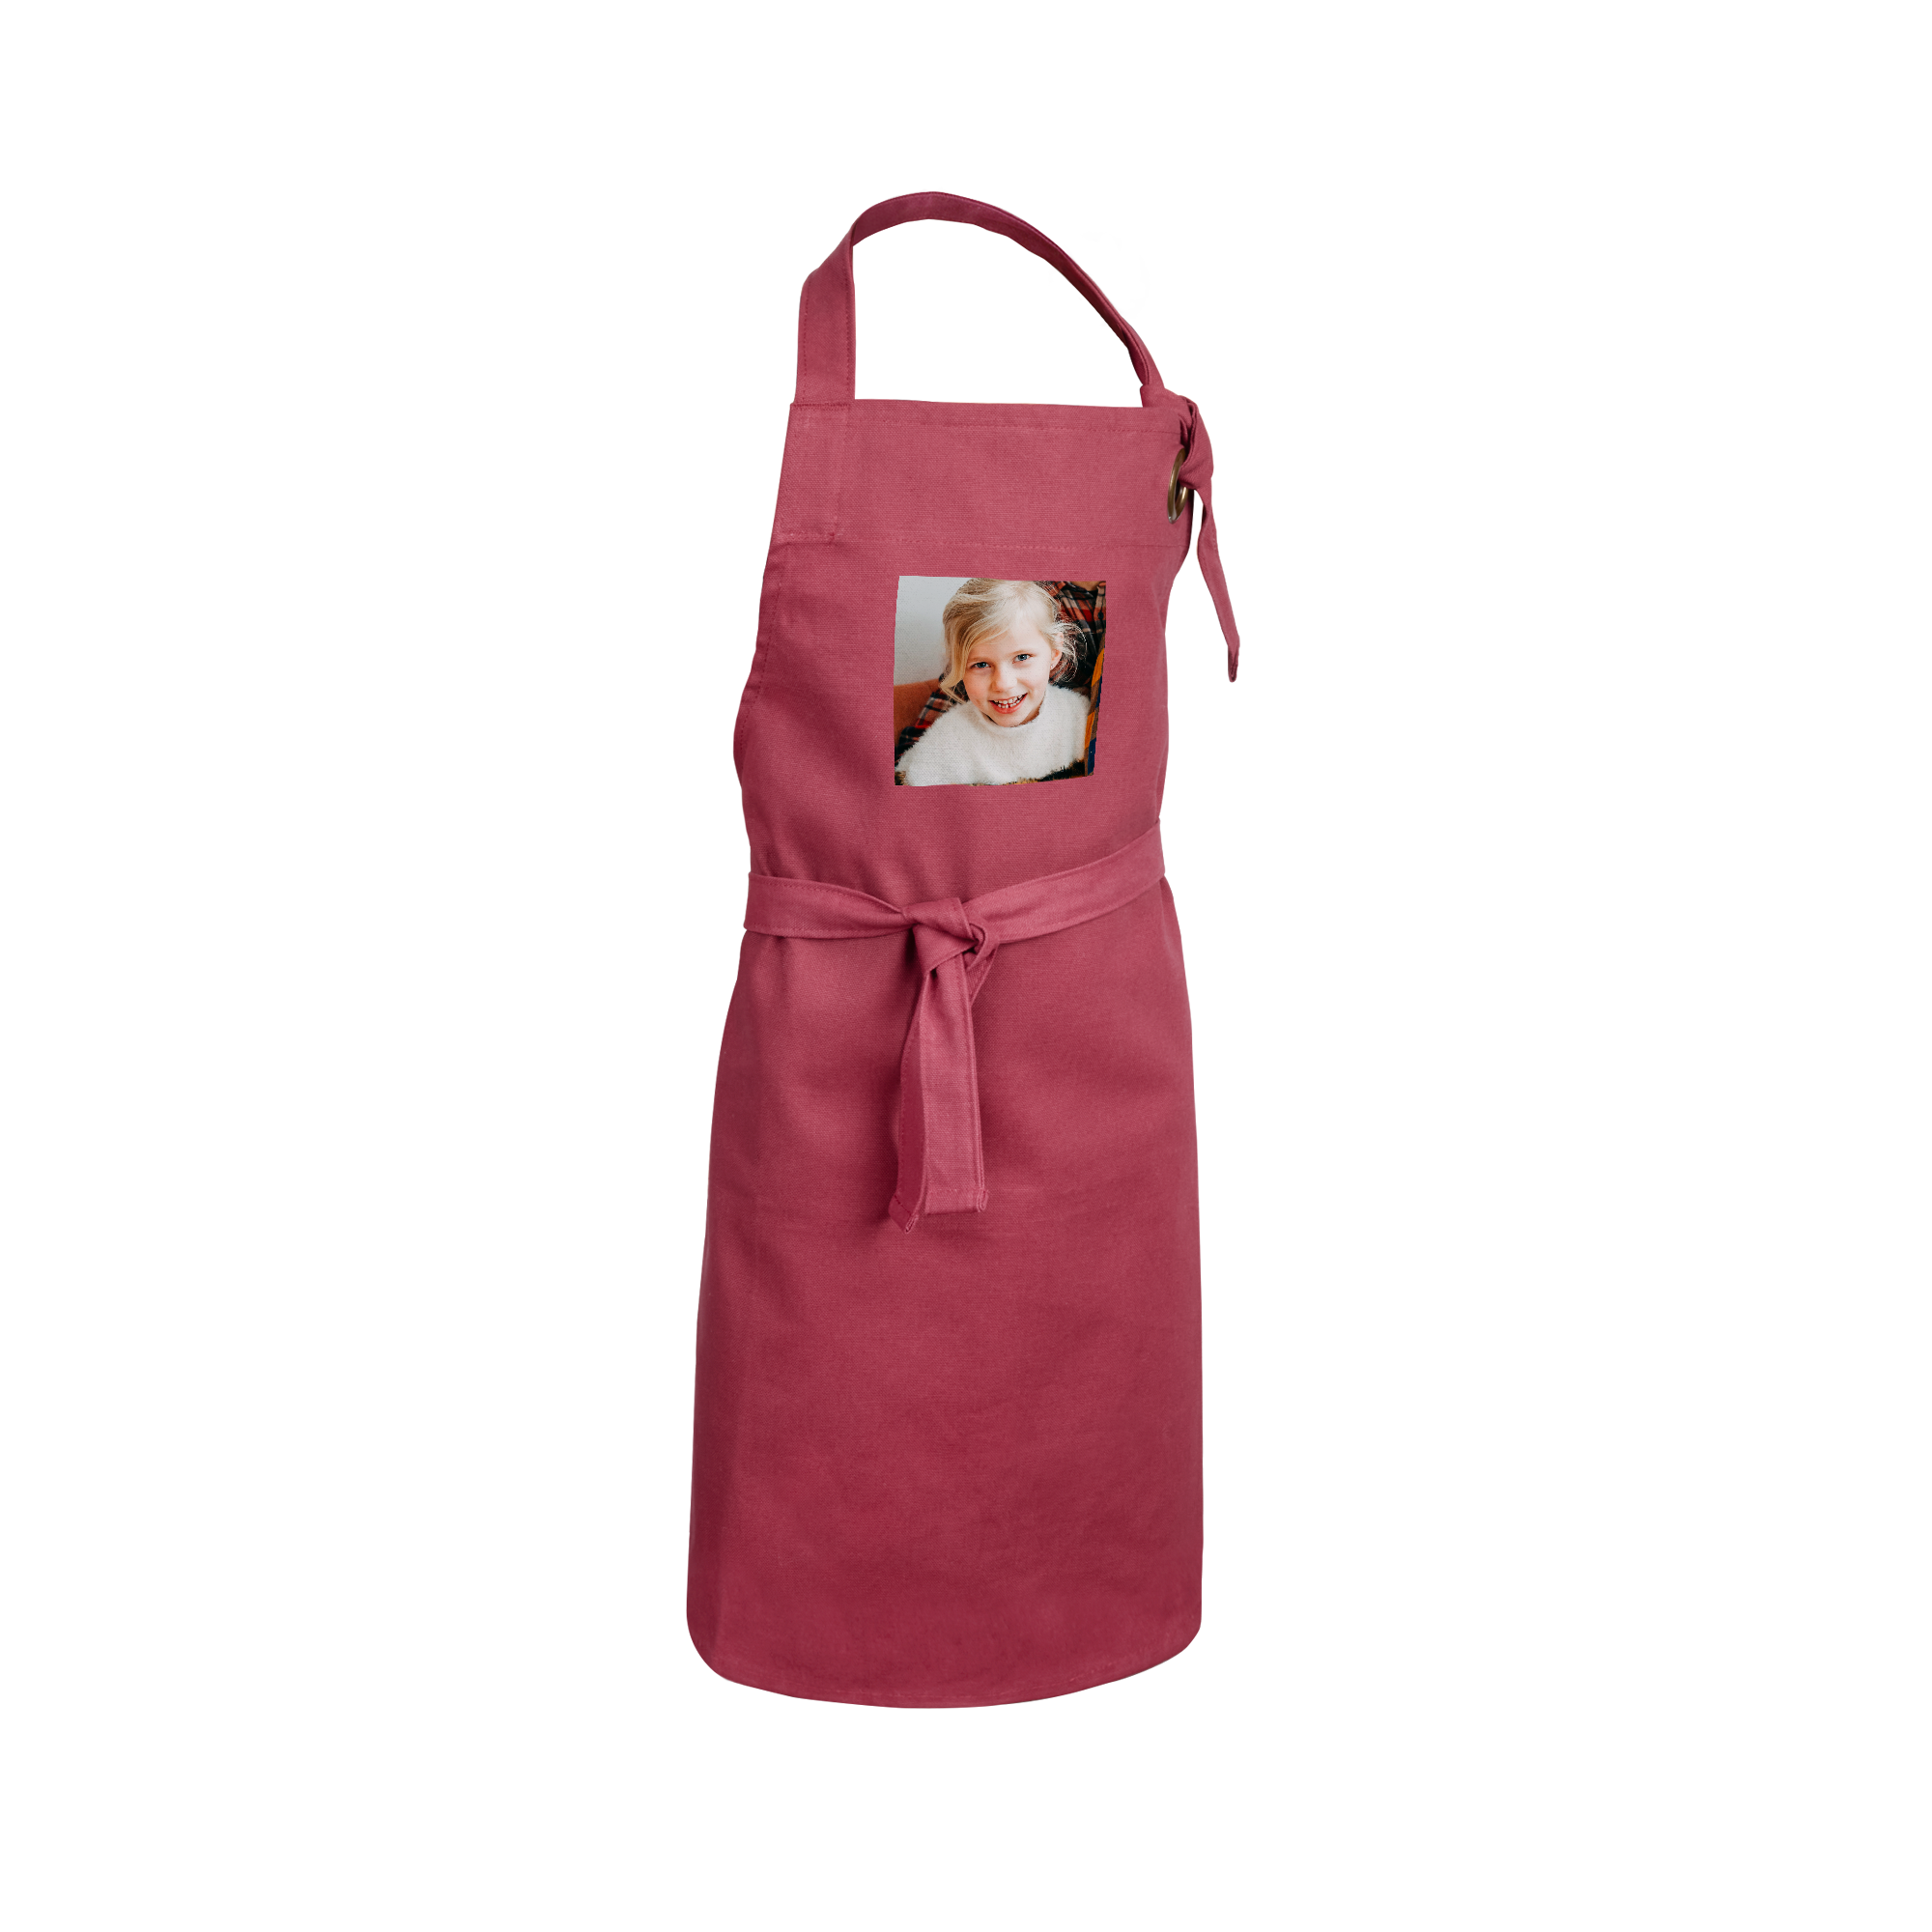 Personalised children's apron - Burgundy